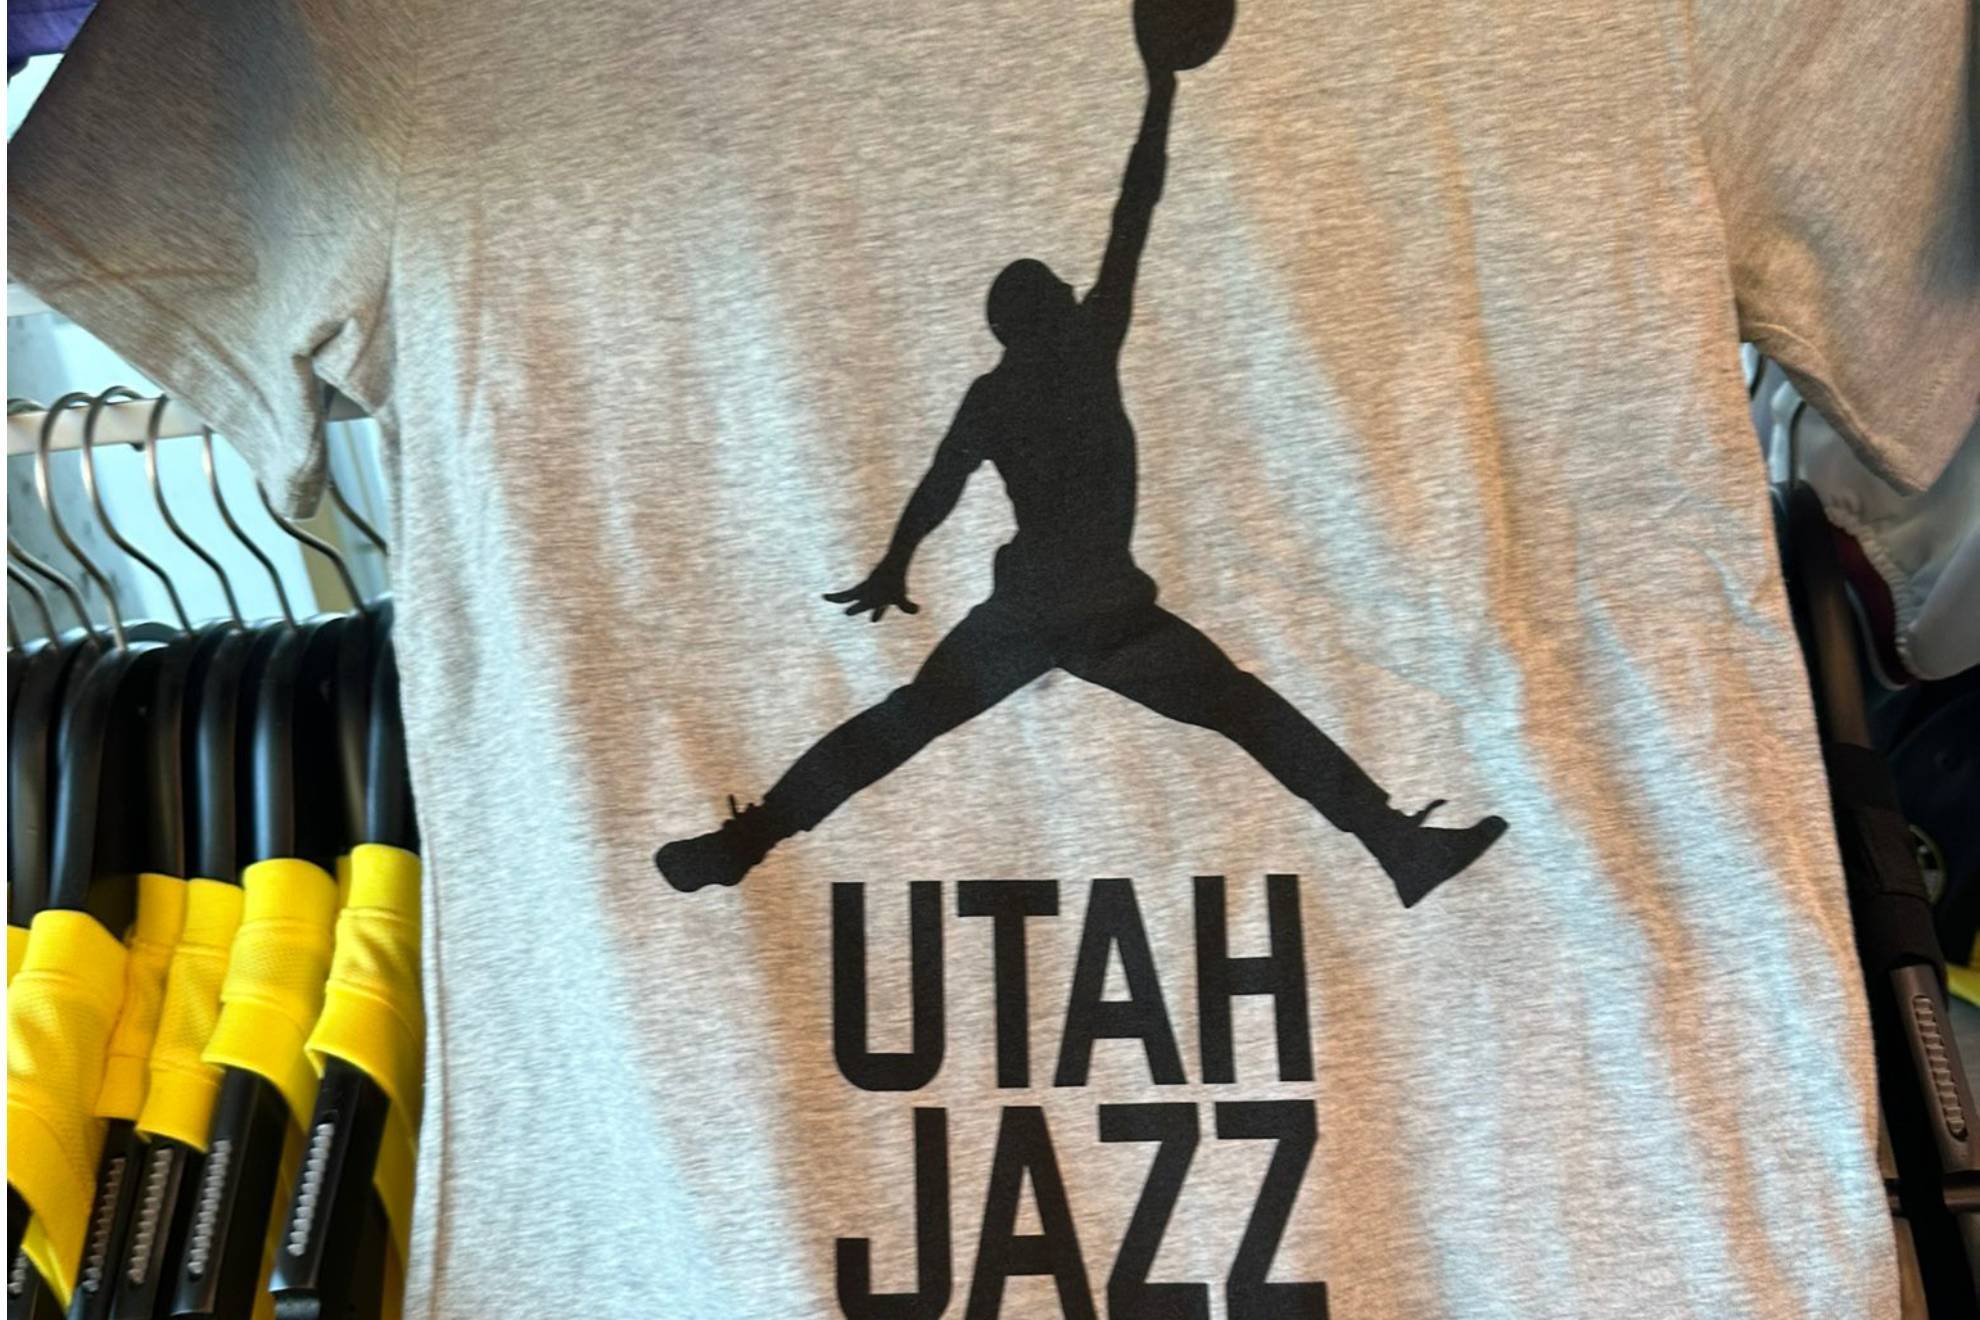 Utah Jazz pull shirts with Michael Jordan Jumpman logo